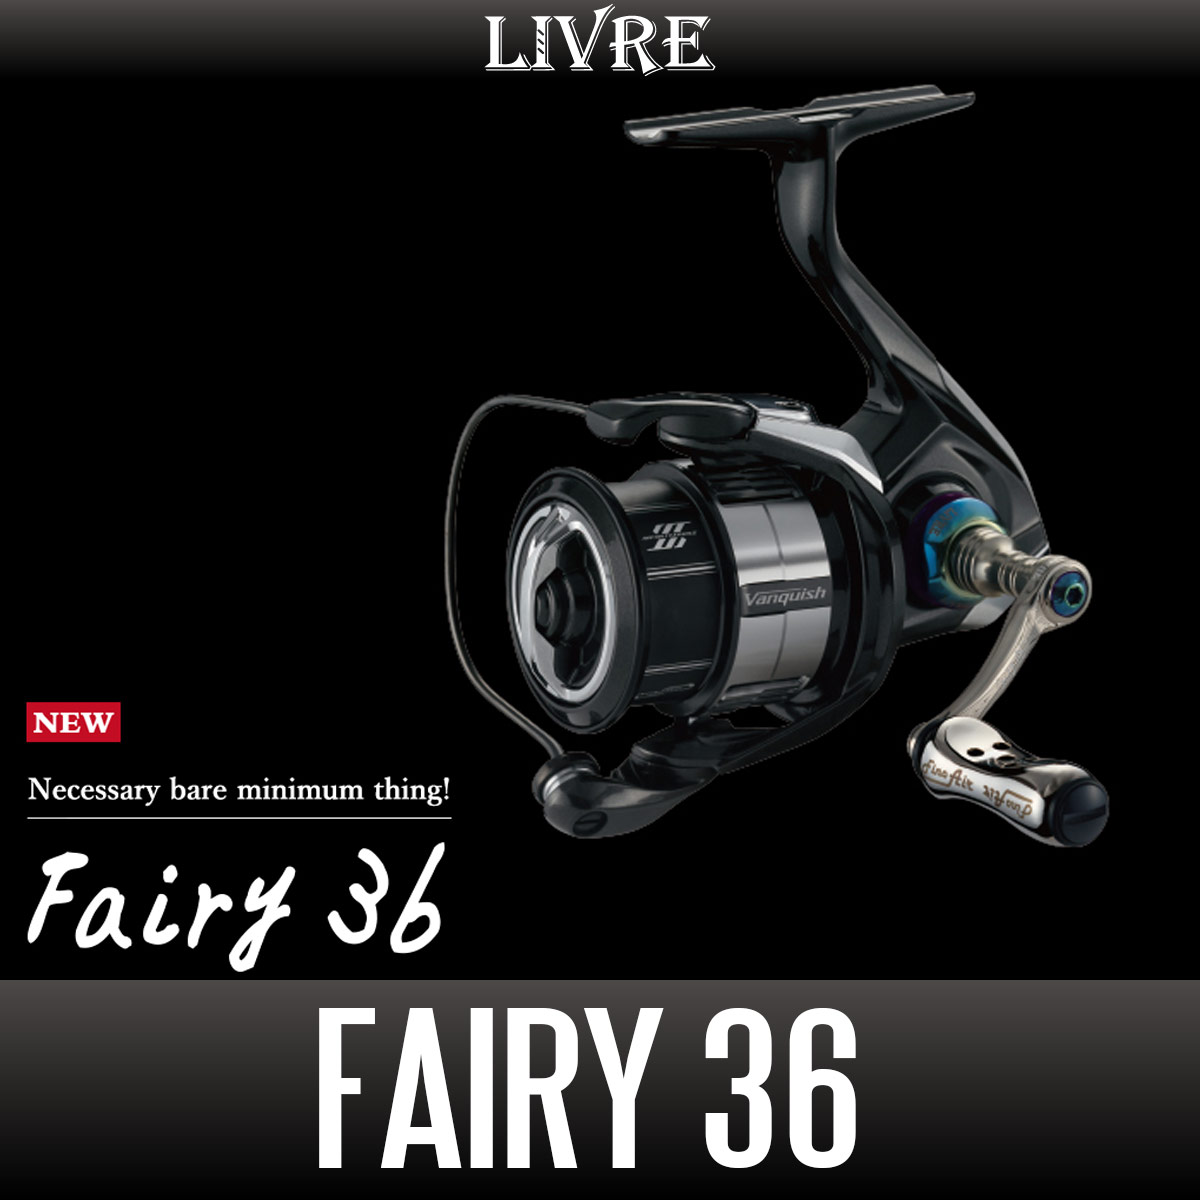 LIVRE] Fairy 36 (Spinning Reel Handle)